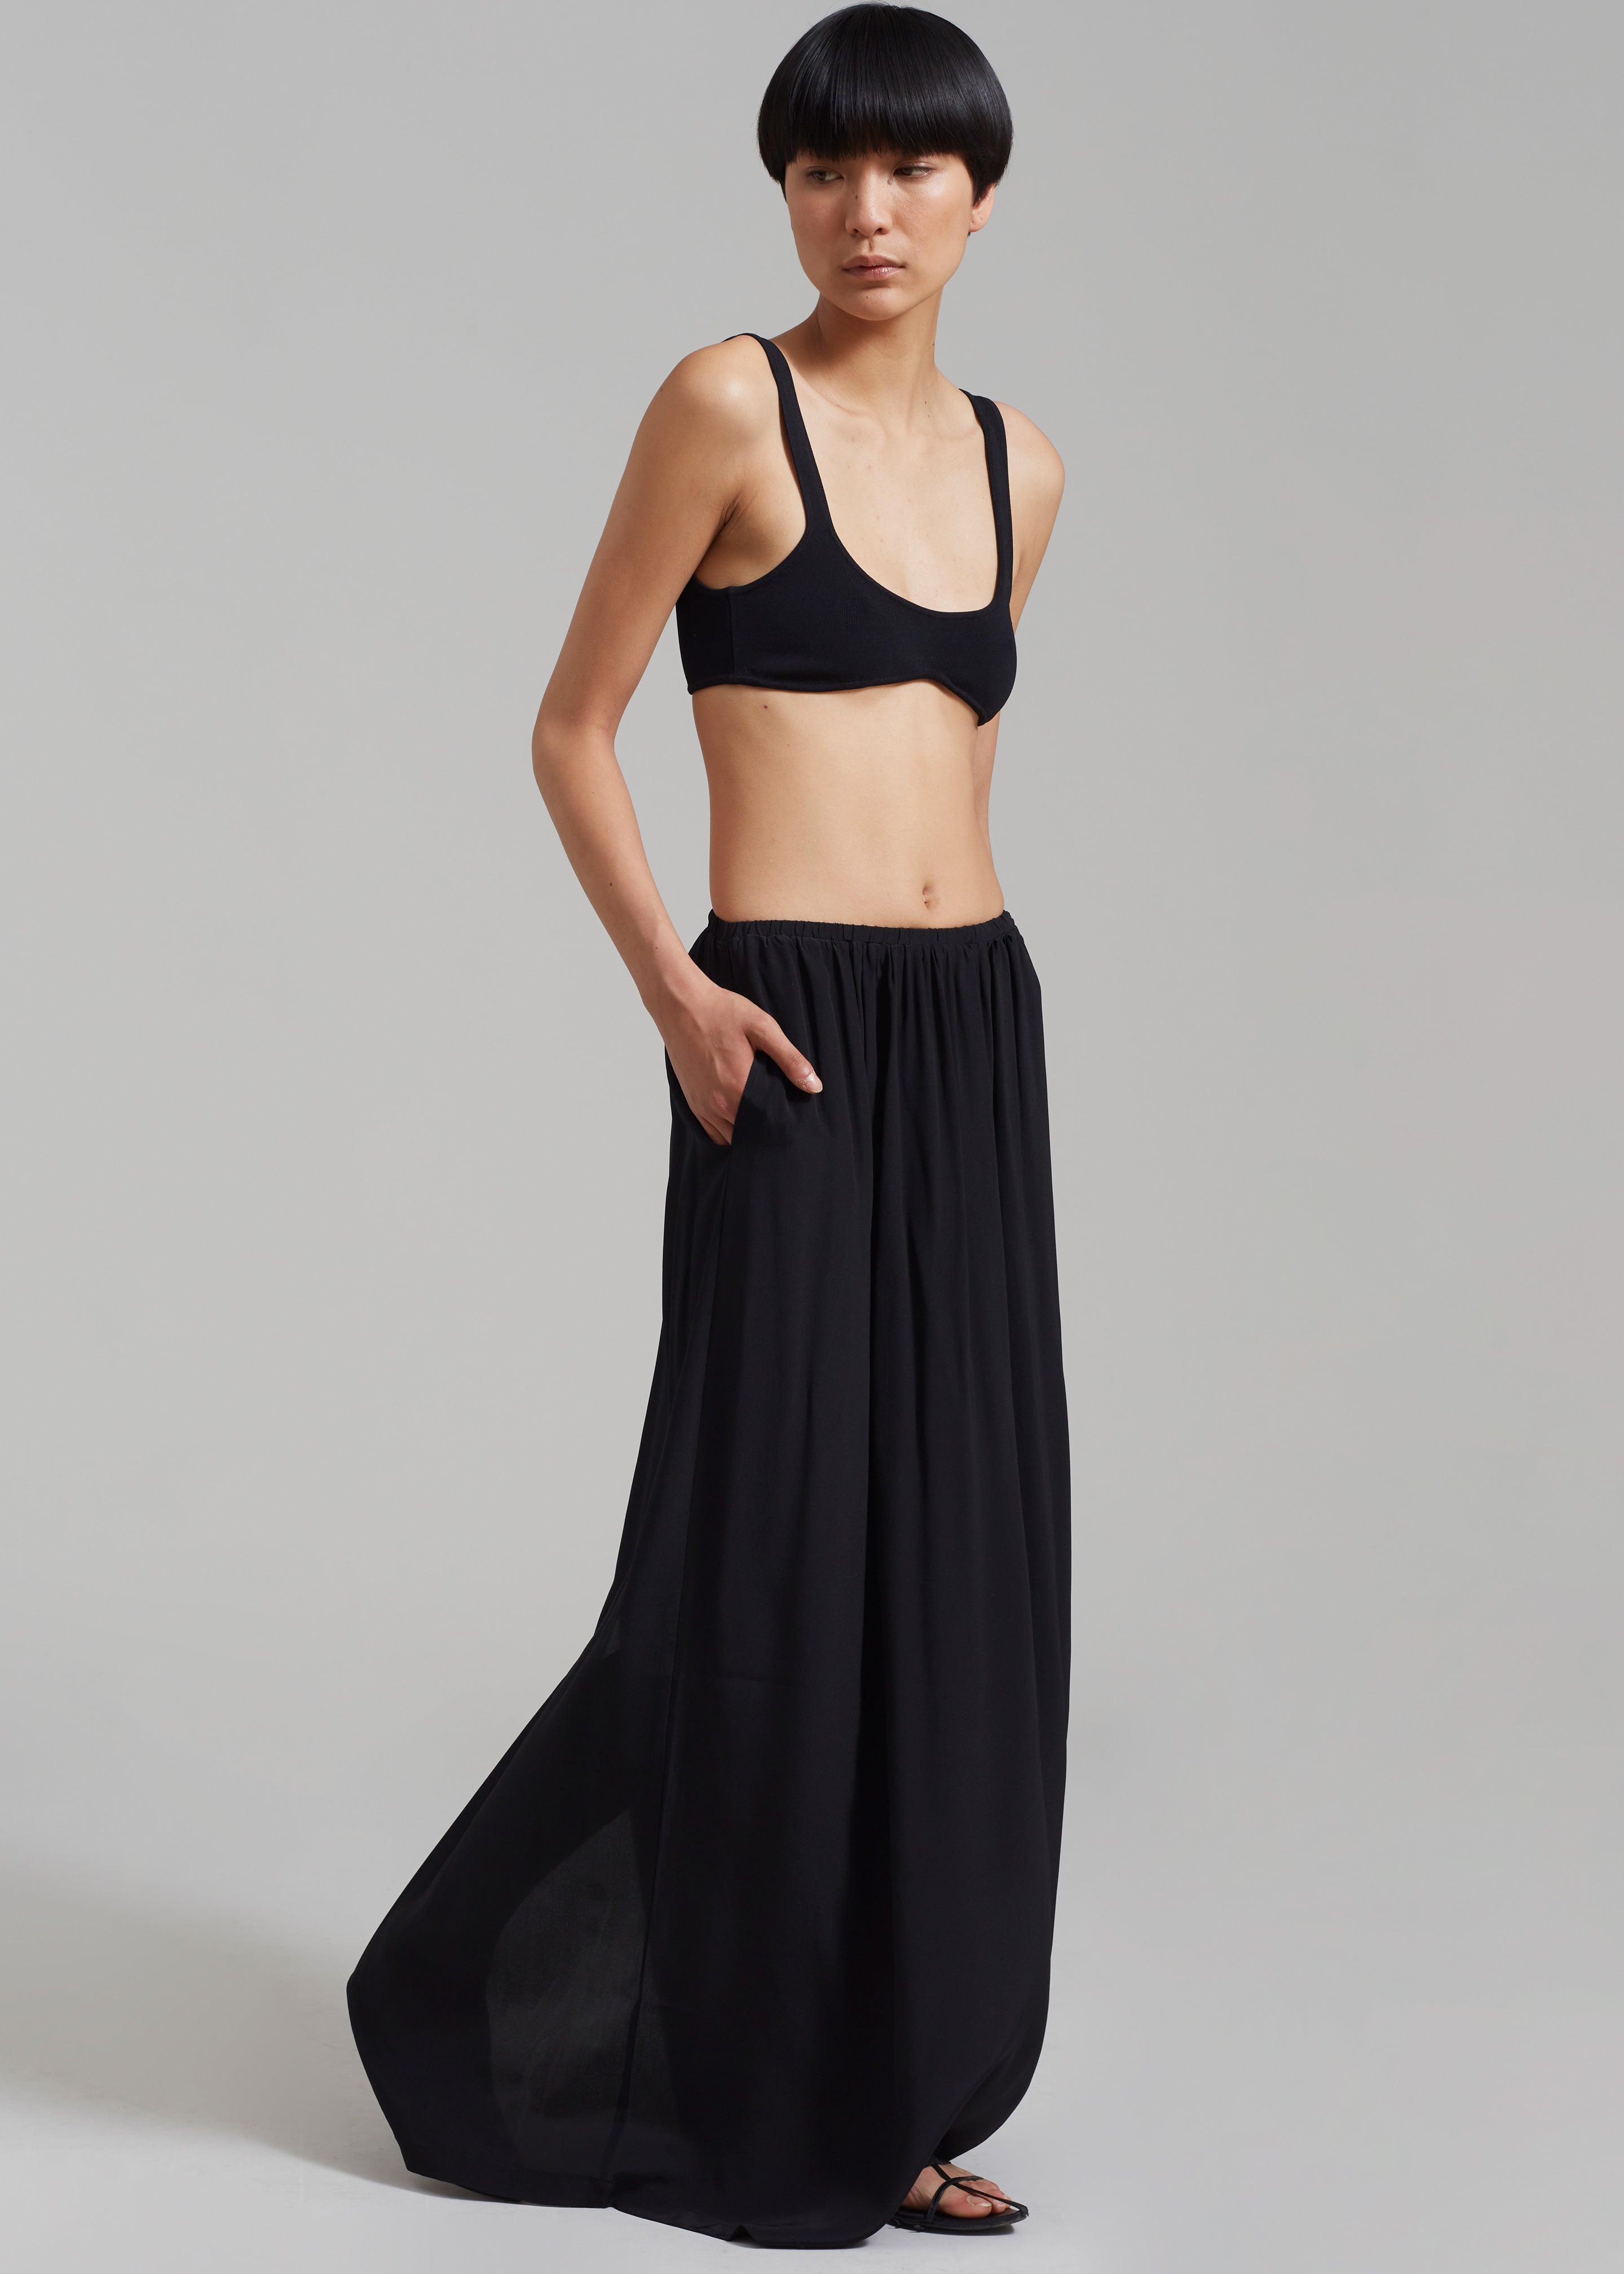 Beare Park Silk Elastic Waist Skirt - Black - 2